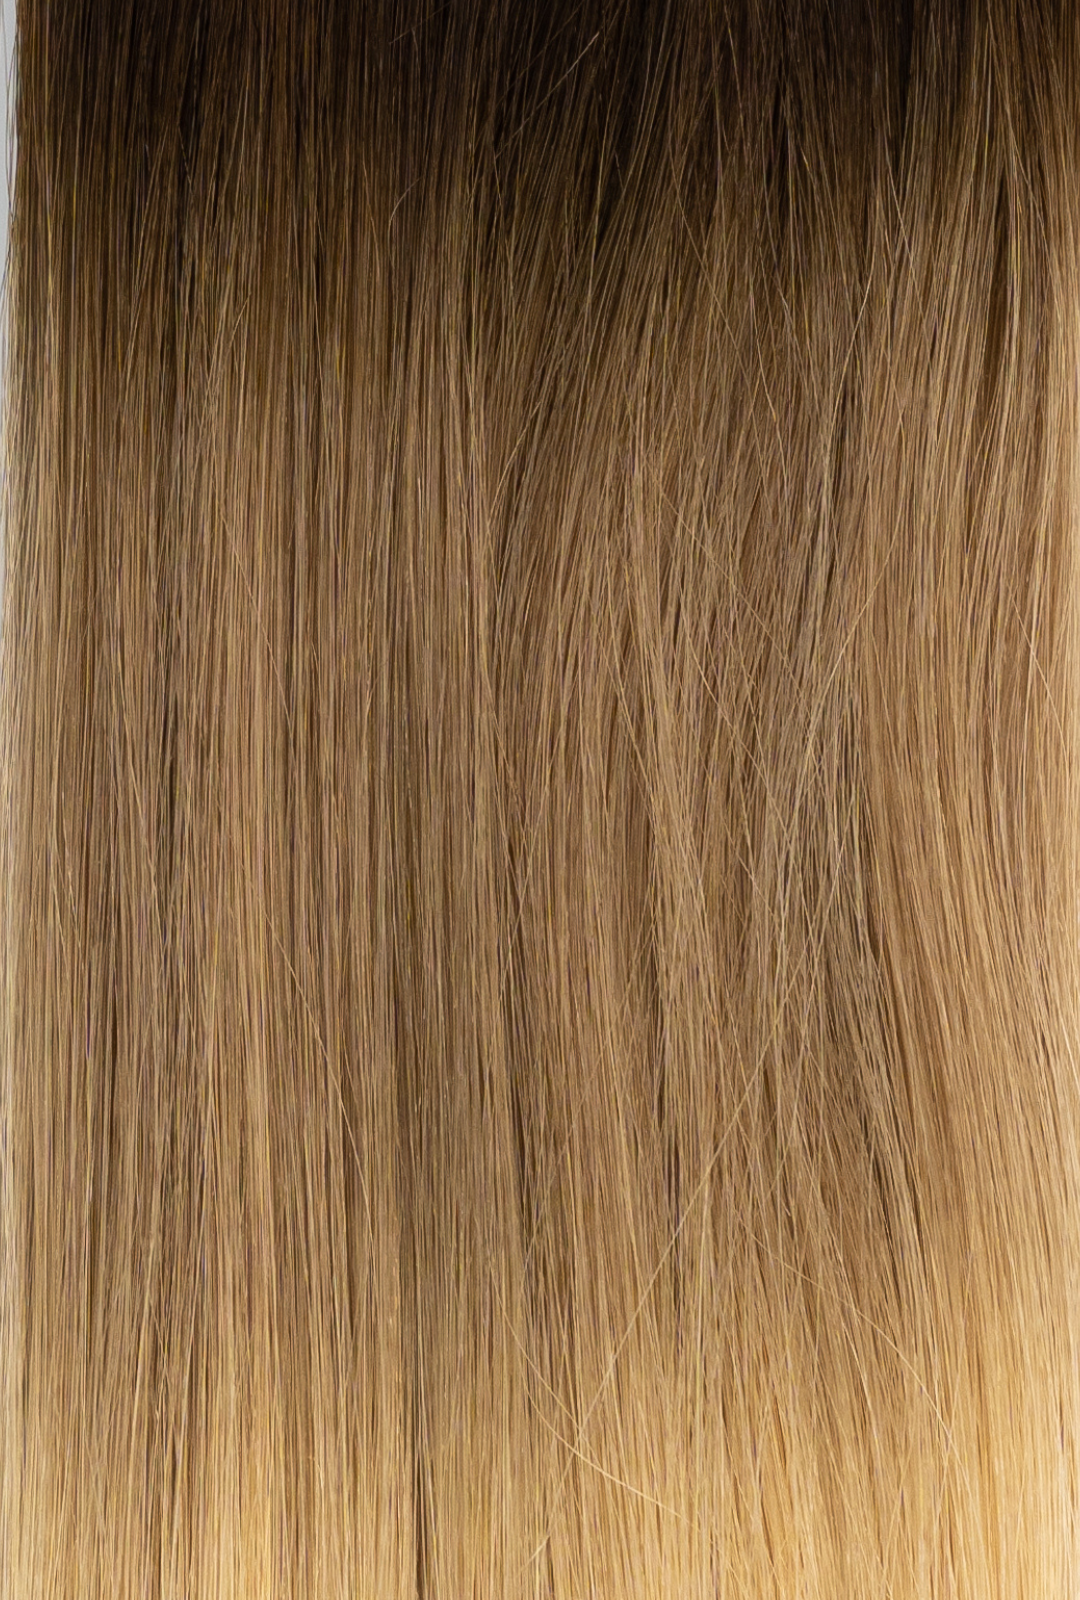 Laced Hair Clip-In Extensions Ombré #2/10/16 (Autumn Ombré)